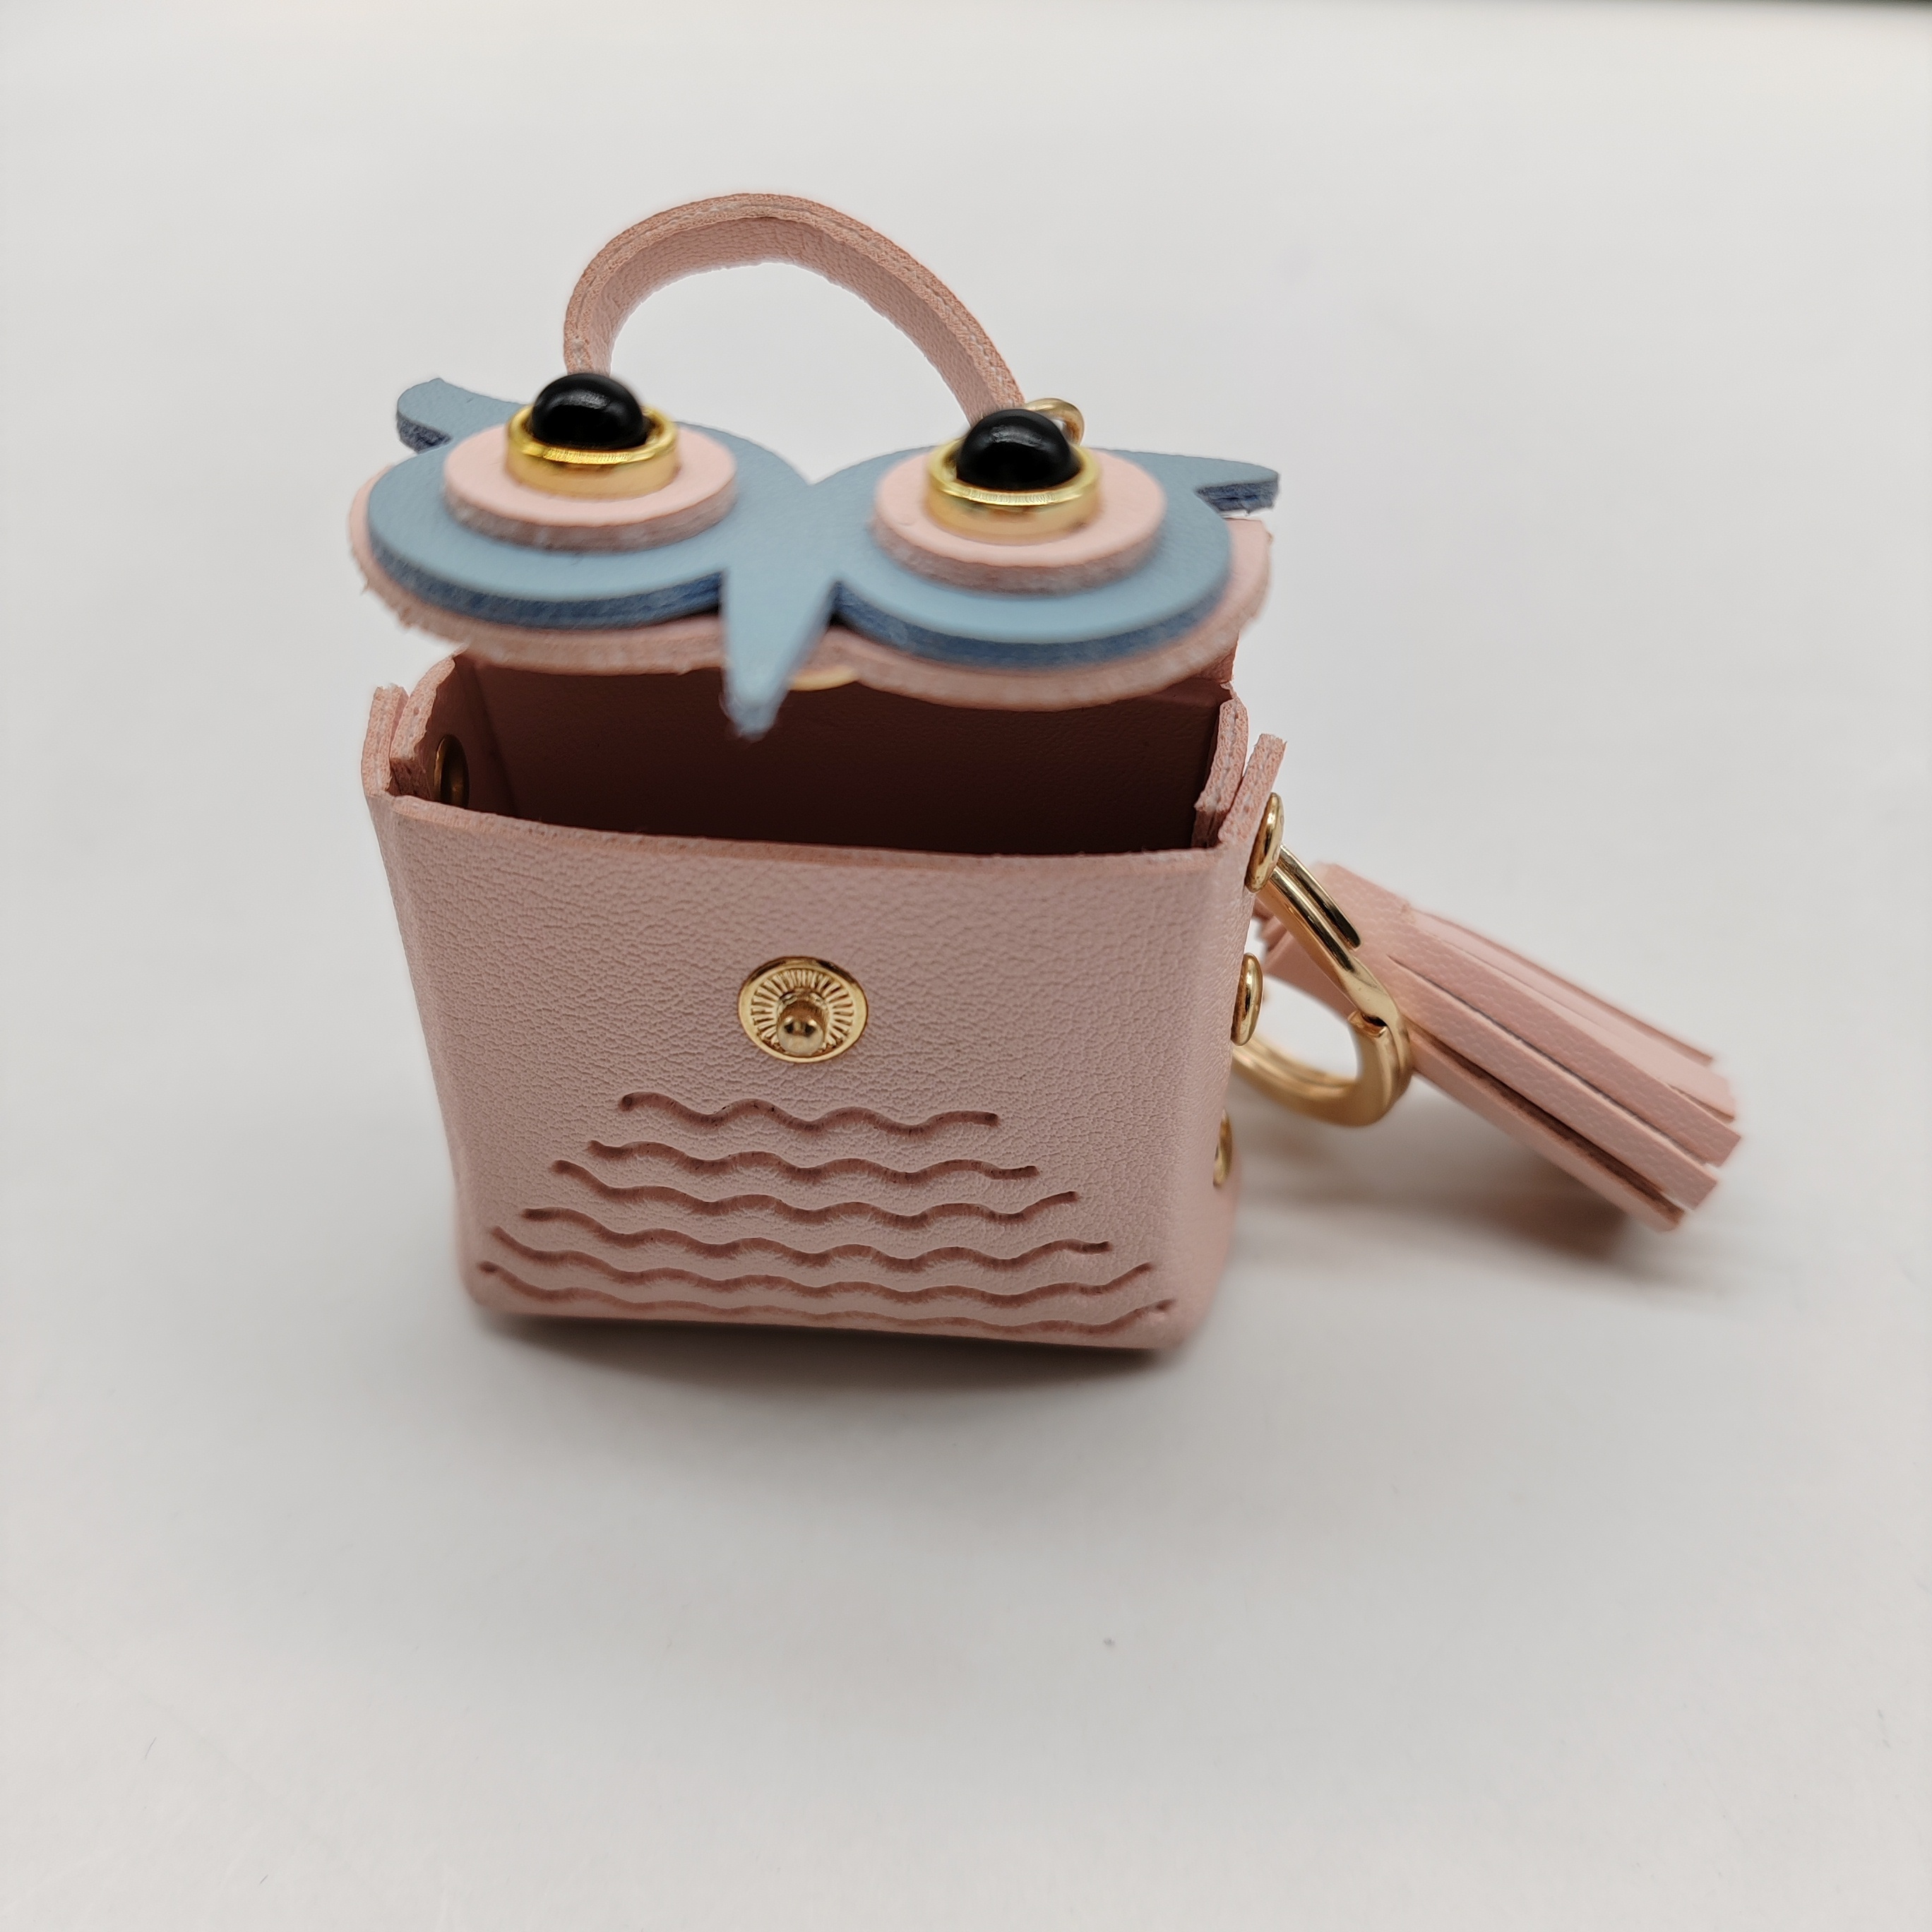 Pu Leather Owl Decor Bag Charm Keychain Key Ring Bag Pendant